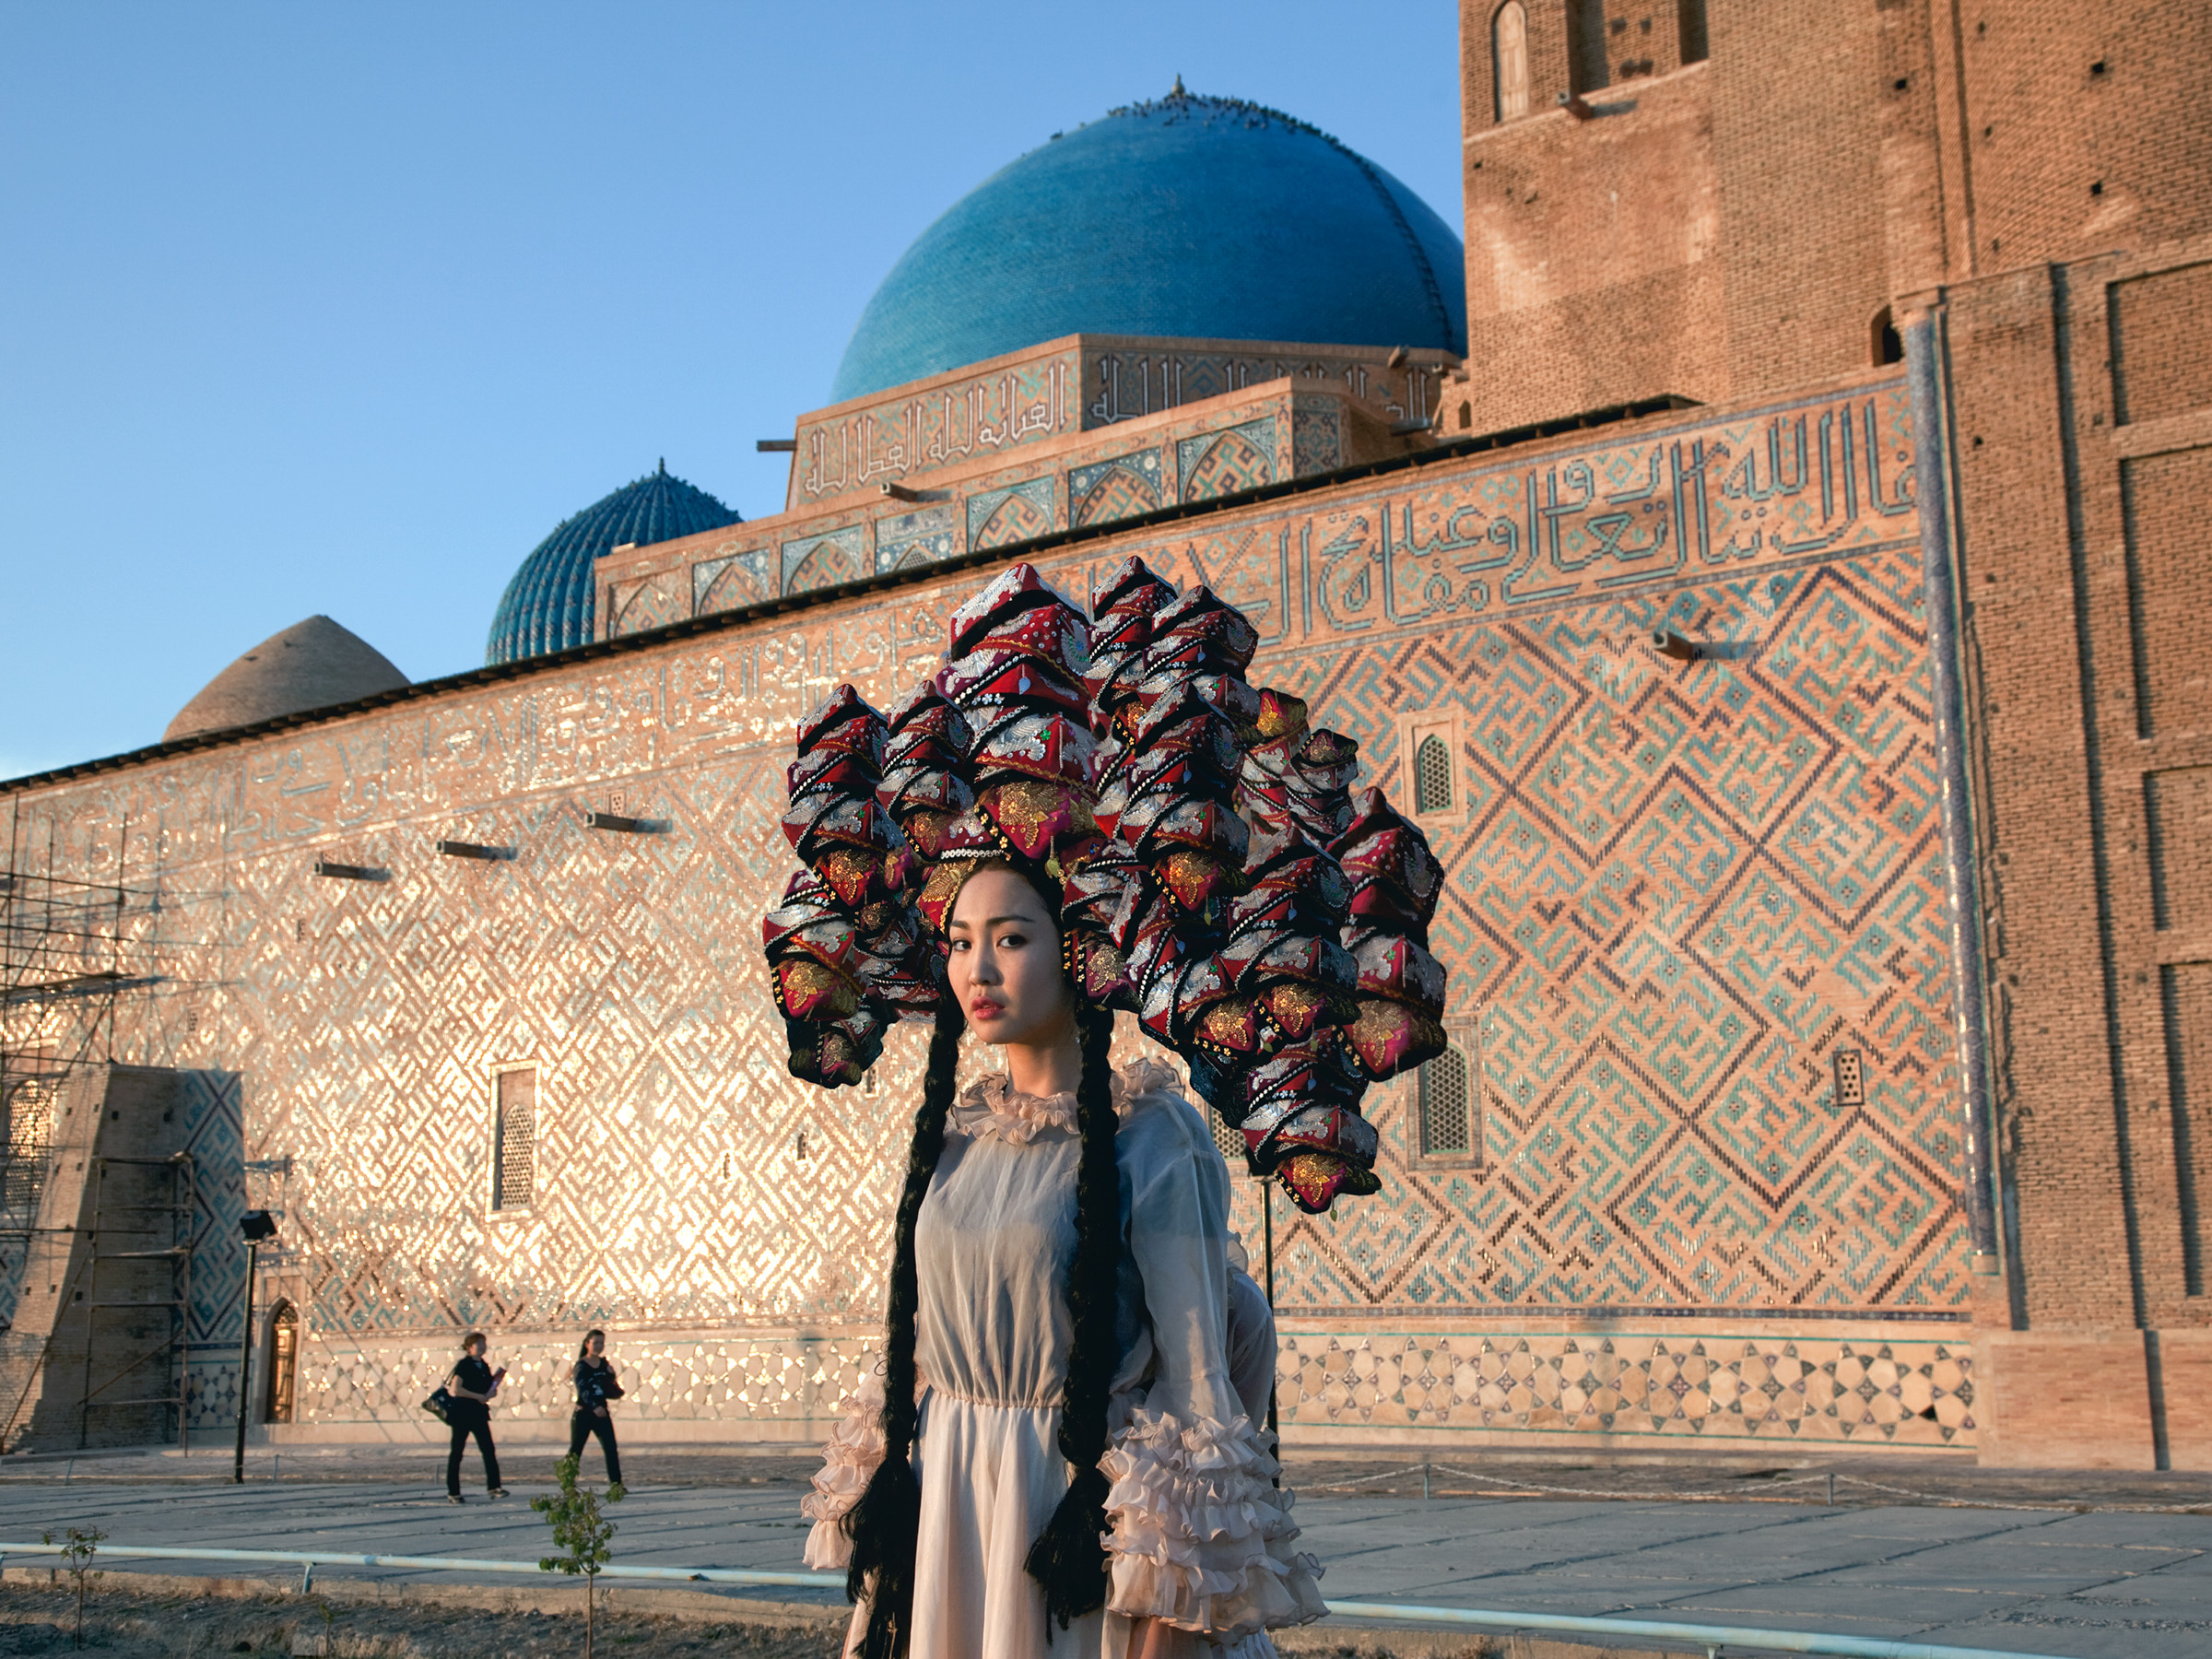     Almagul Menlibayeva, Aisha Bibi, 2010, from the series My Silk Road to You. Courtesy of the artist

